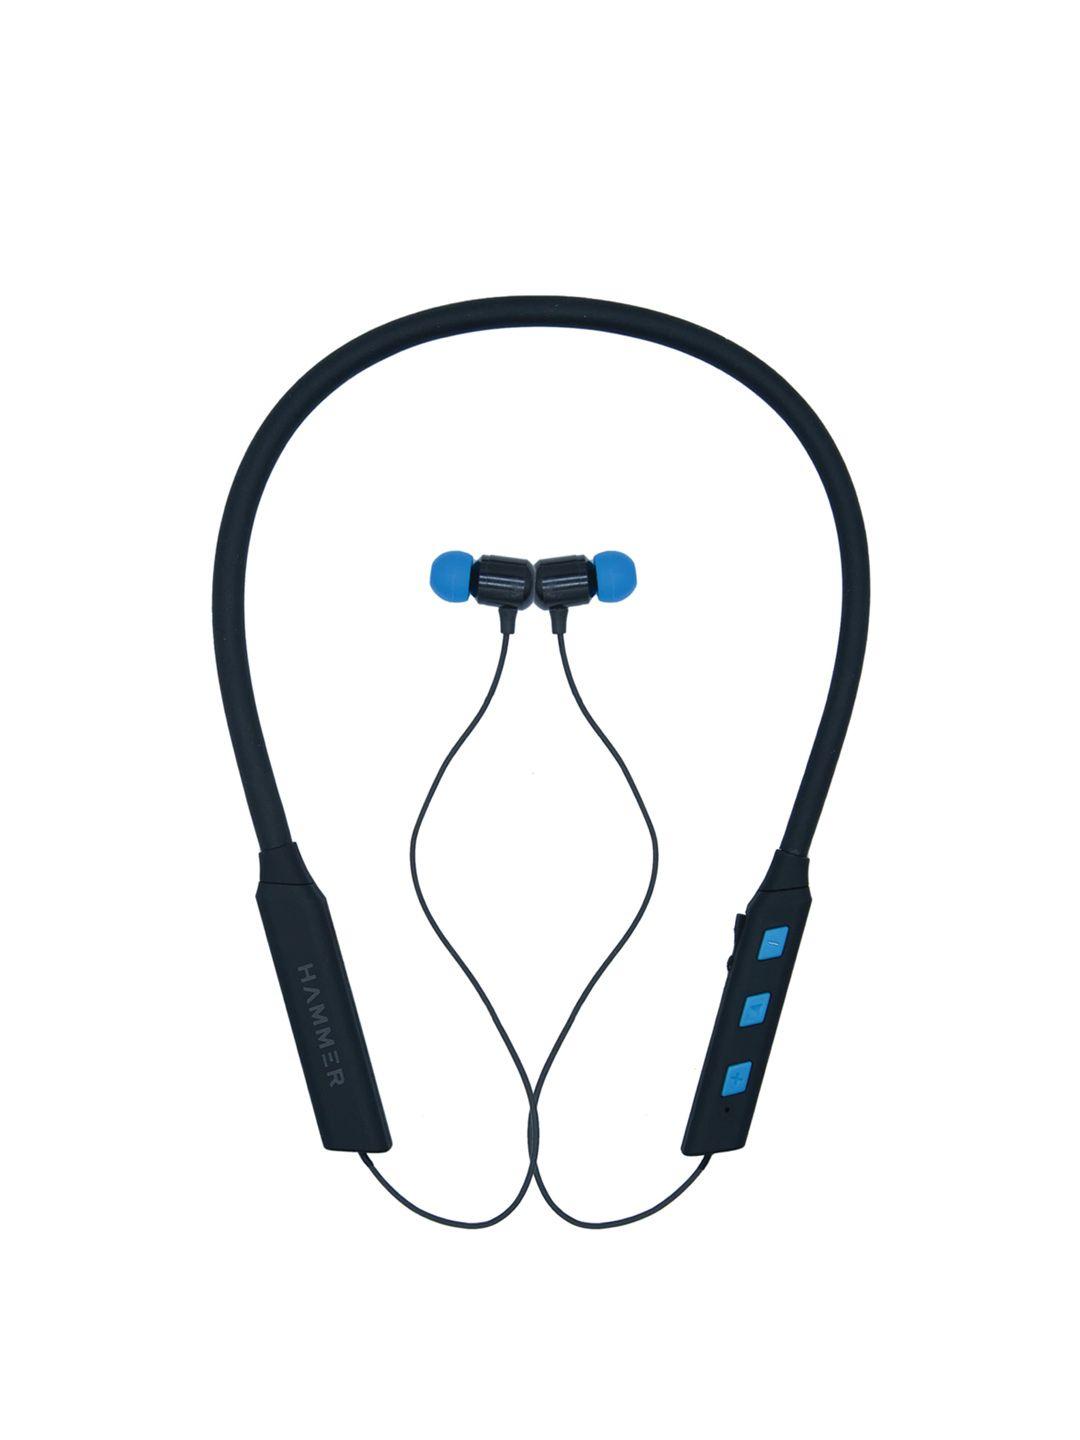 hammer sting flexi wireless earphone bluetooth headphone neckband (black)